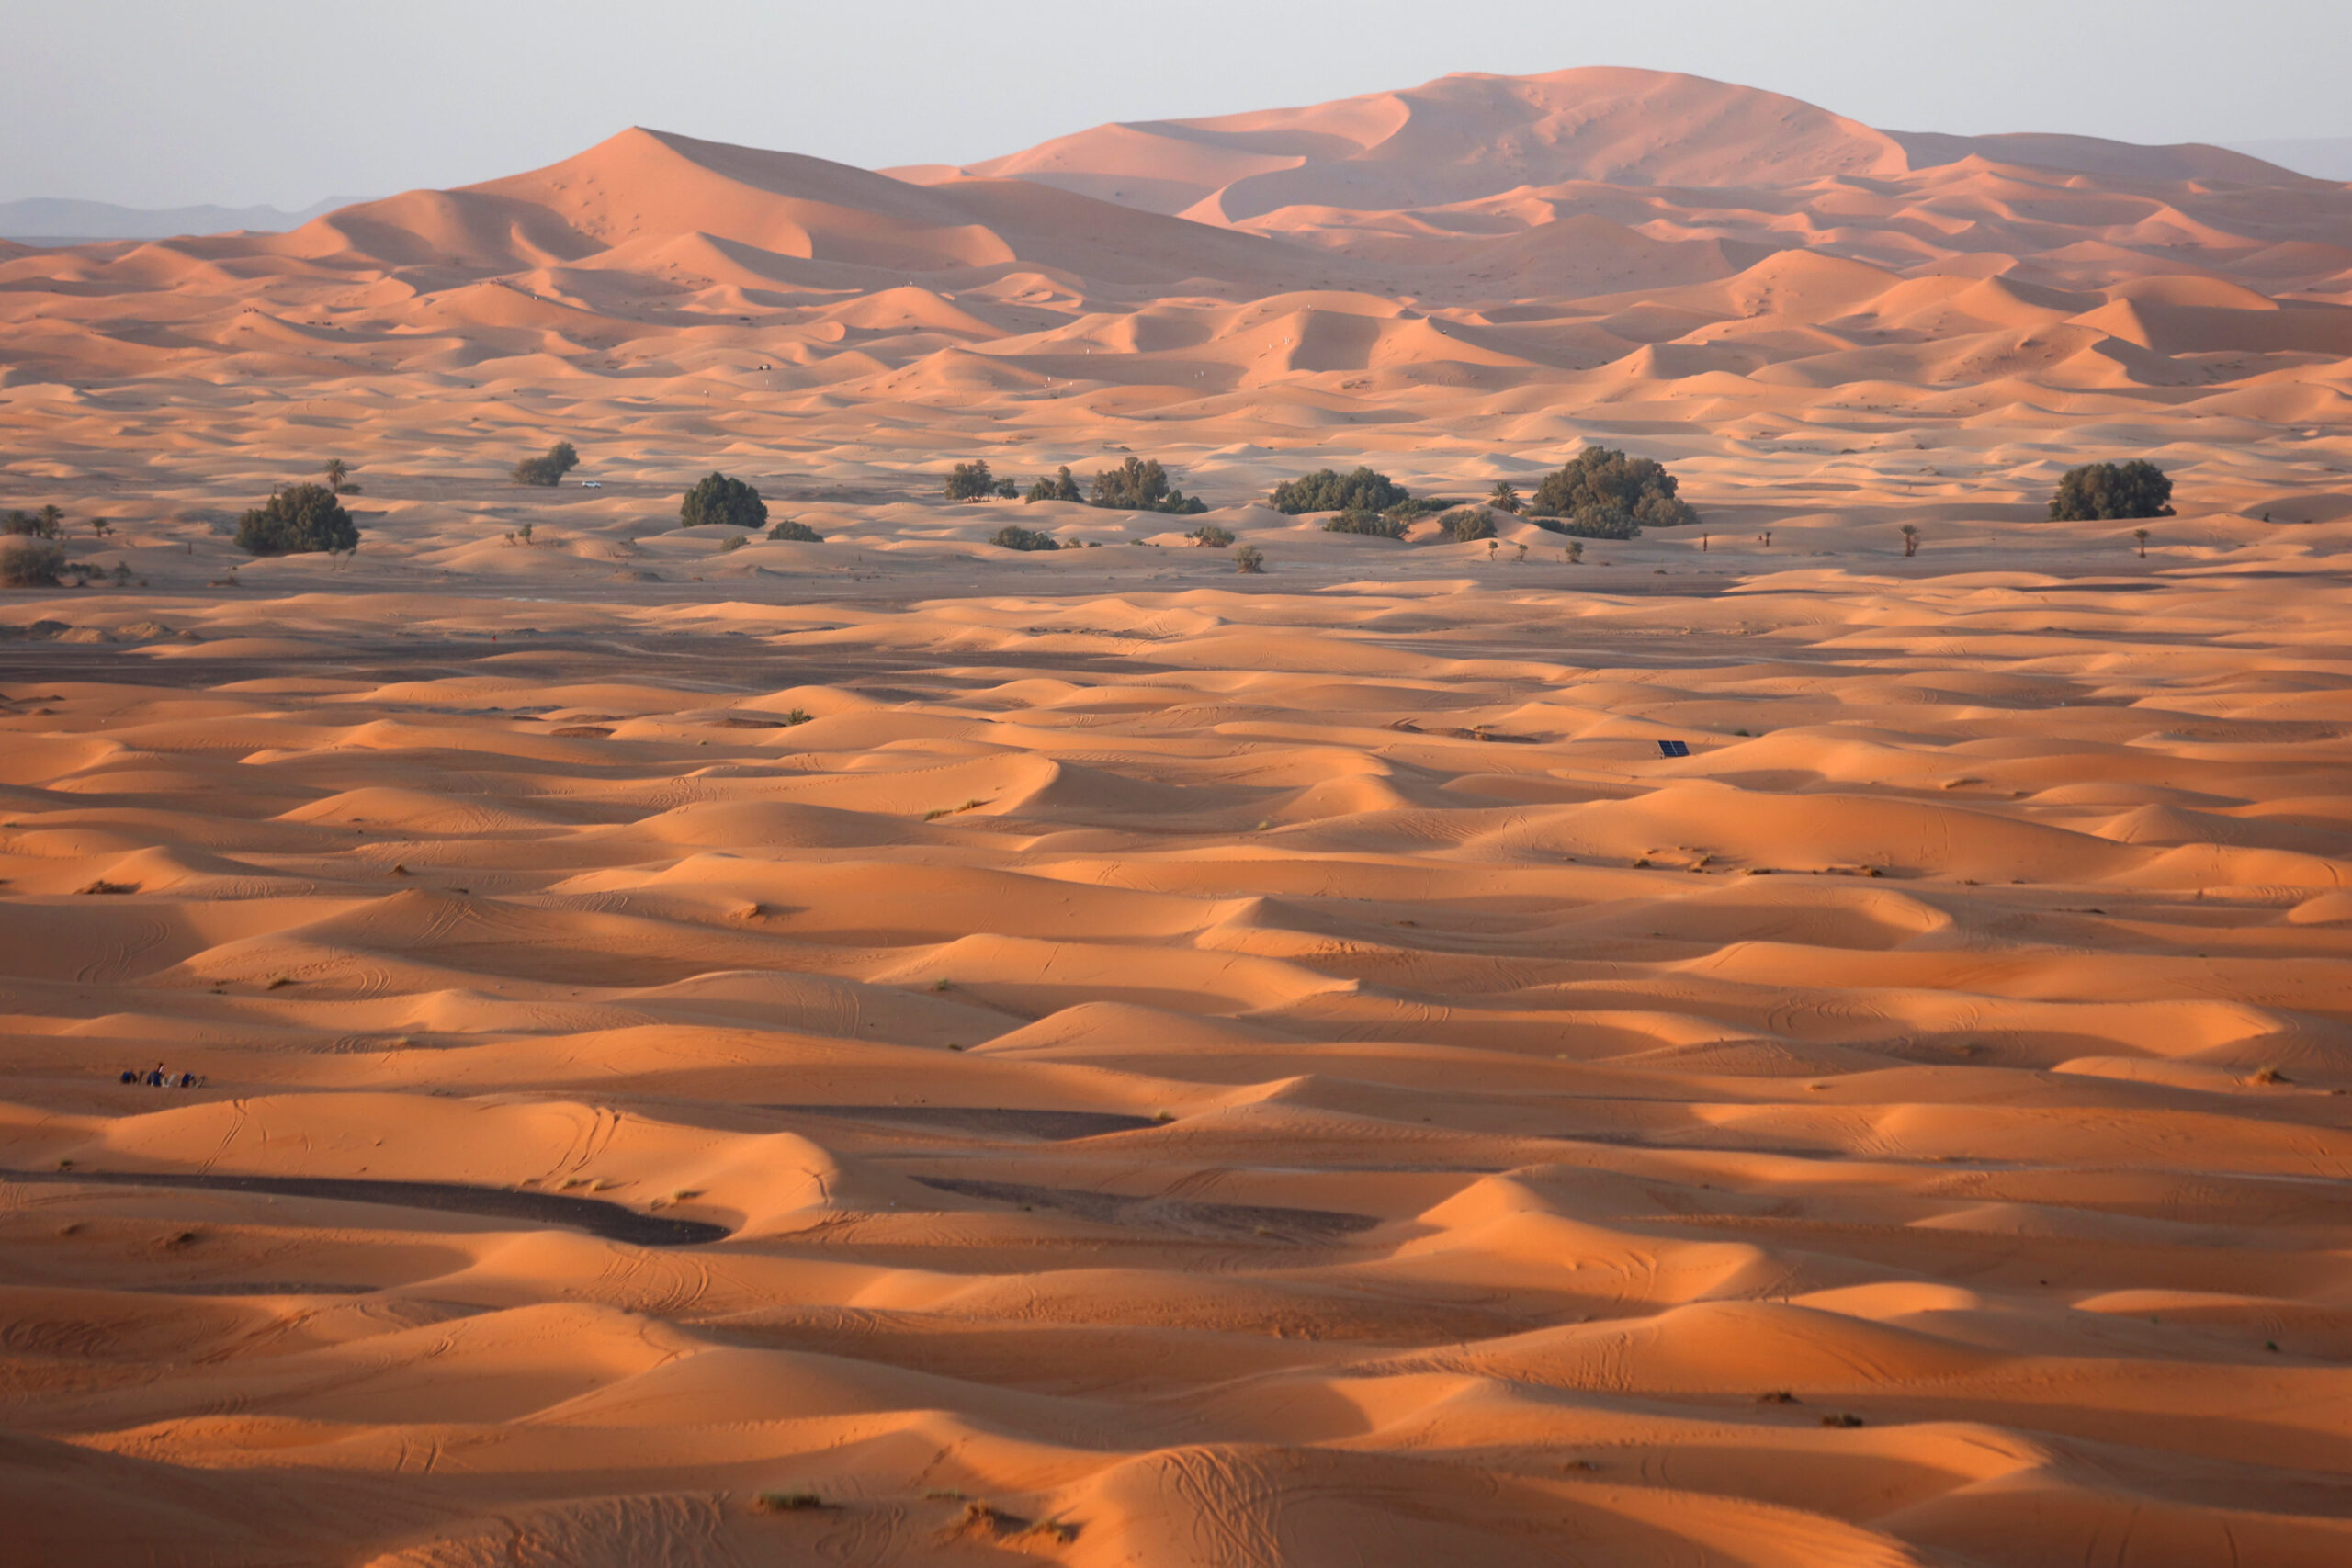 tour por el desierto marruecos.